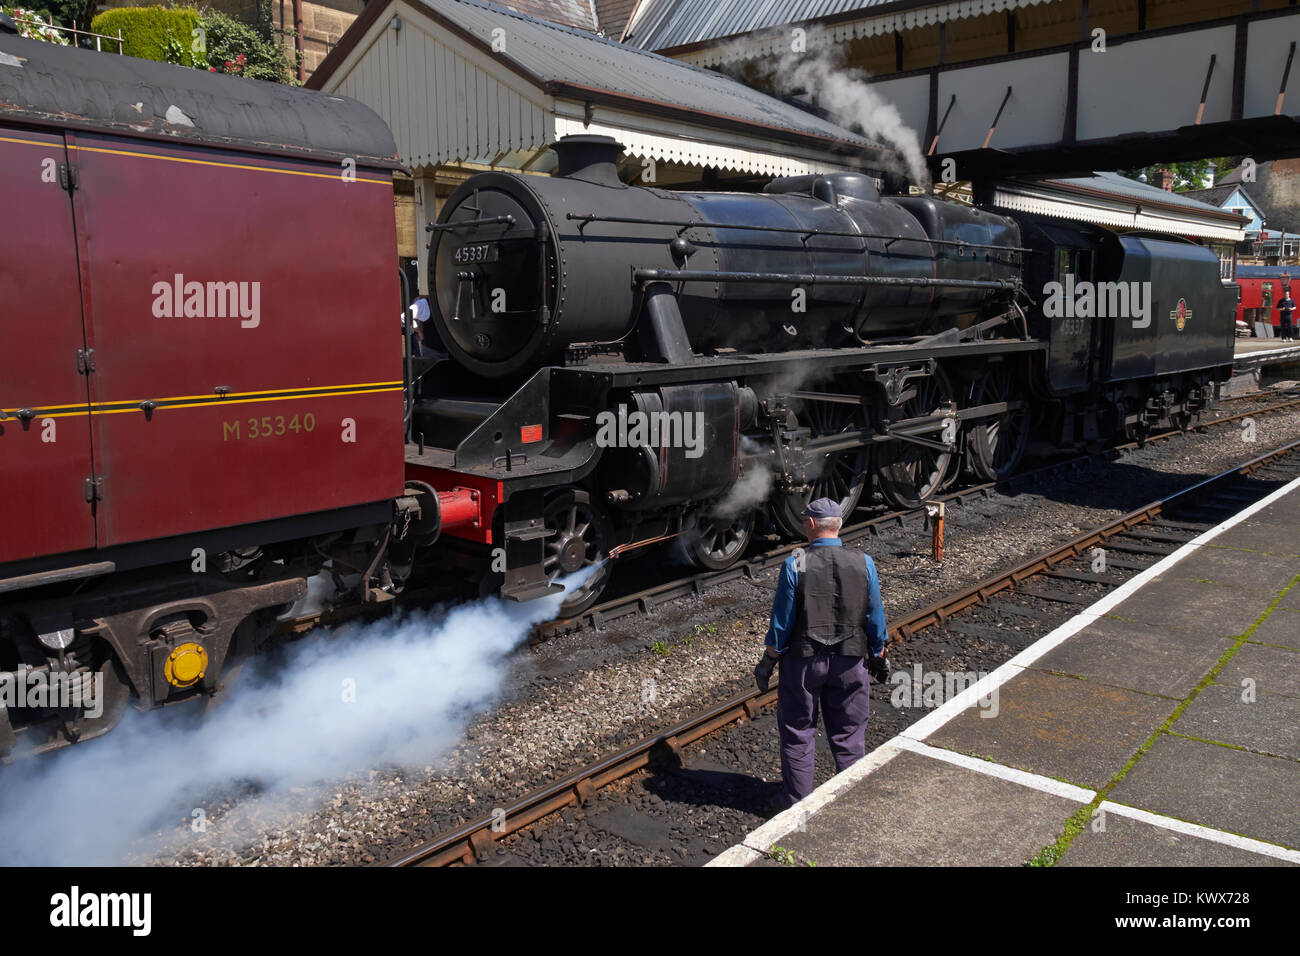 A steam locomotive (LMS Black 5 – 45337) at Llangollen railway station, Denbighshire, Wales. Stock Photo